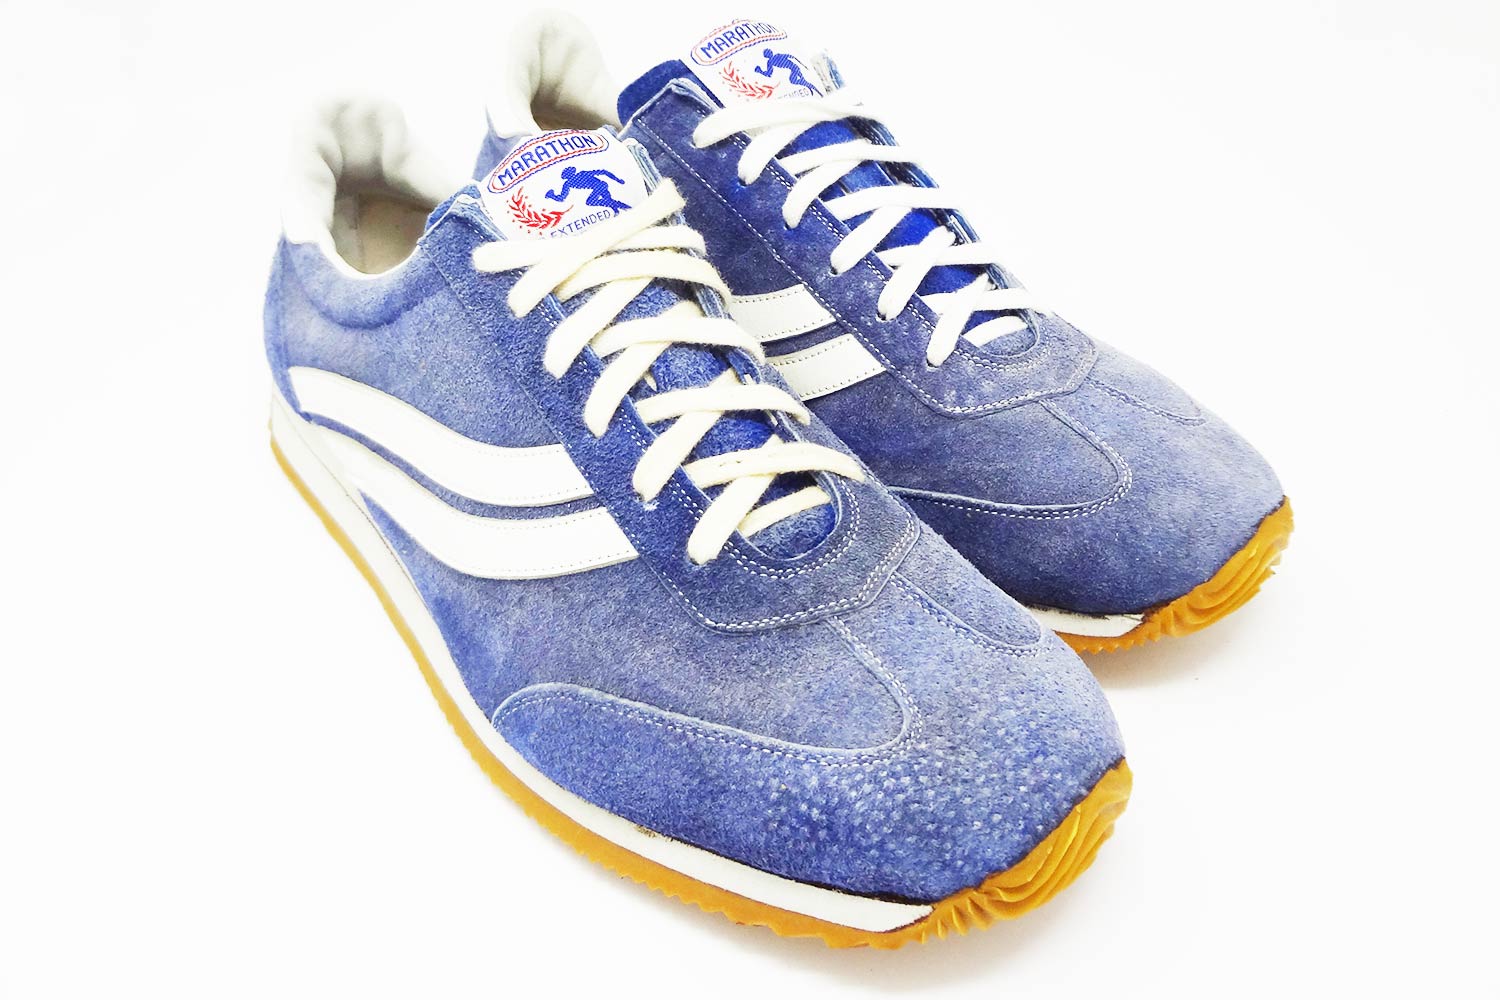 Retro Marathon brand 70s 80s vintage sneakers @ The Deffest